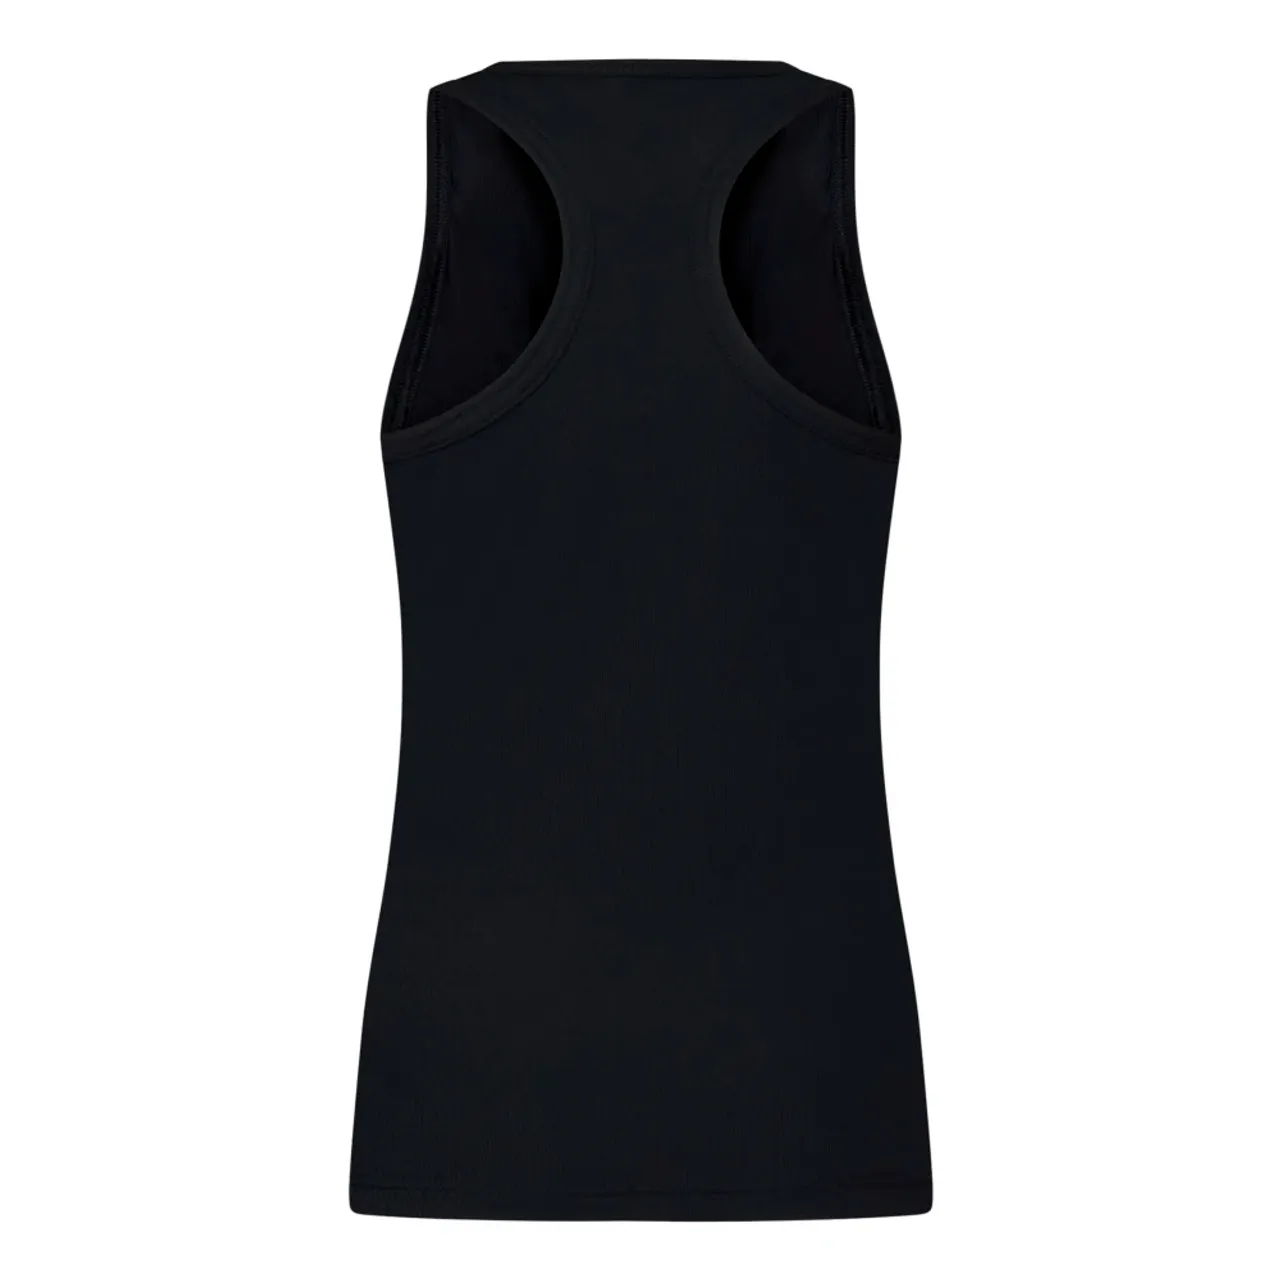 Adidas by Stella McCartney , Stylish Sleeveless Top for Workouts ,Black female, Sizes: